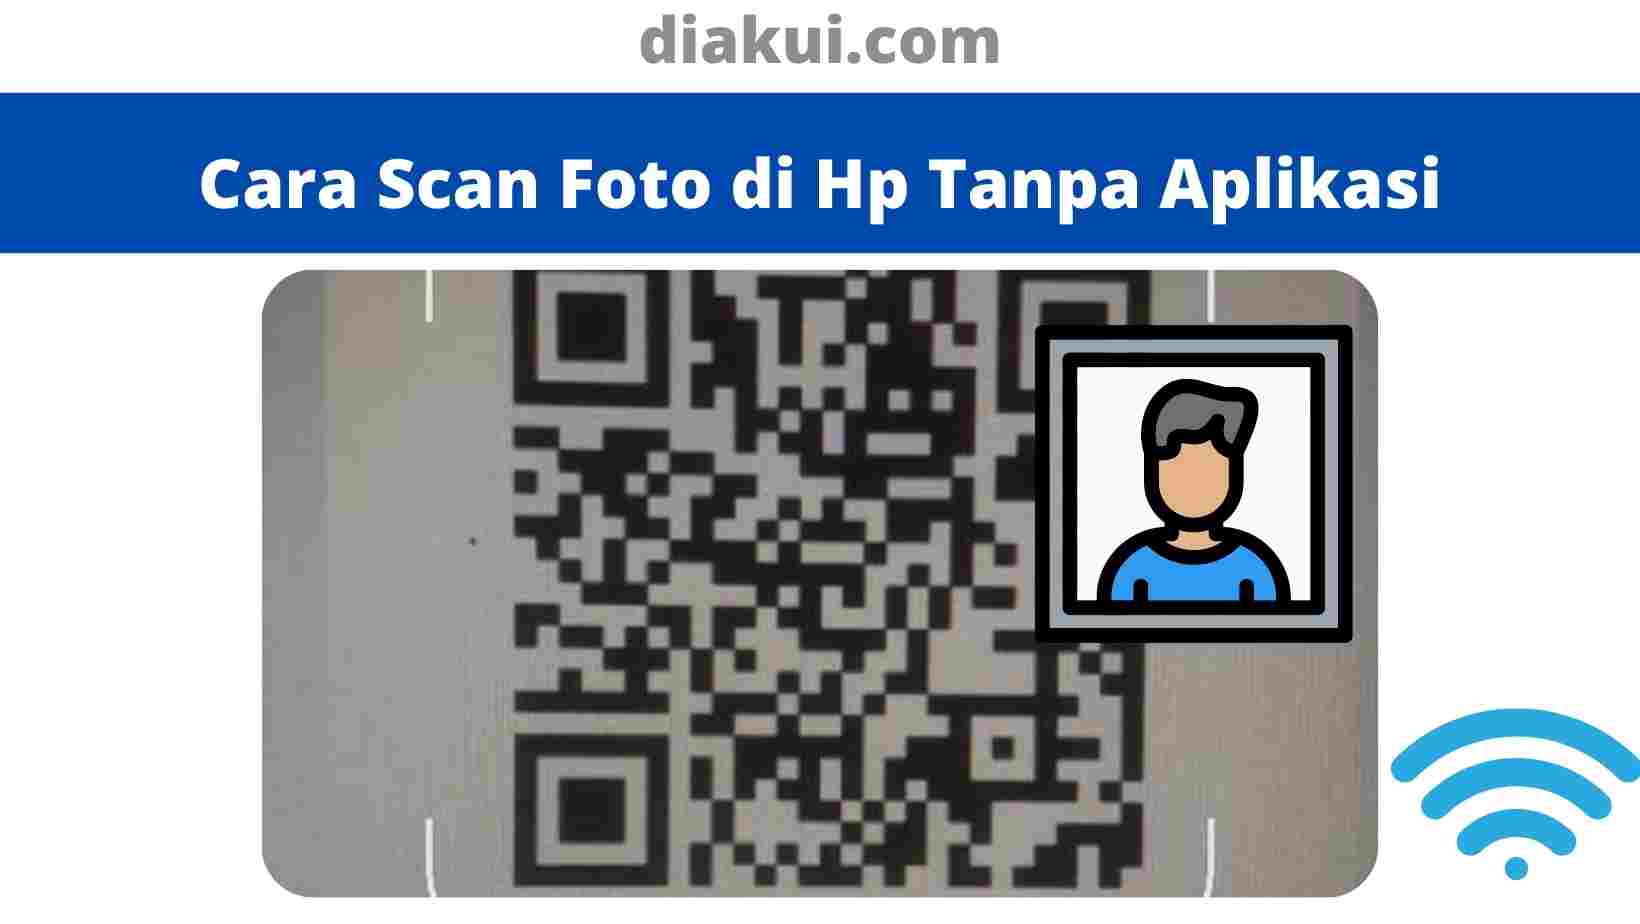 Cara Scan Foto di Hp Tanpa Aplikasi